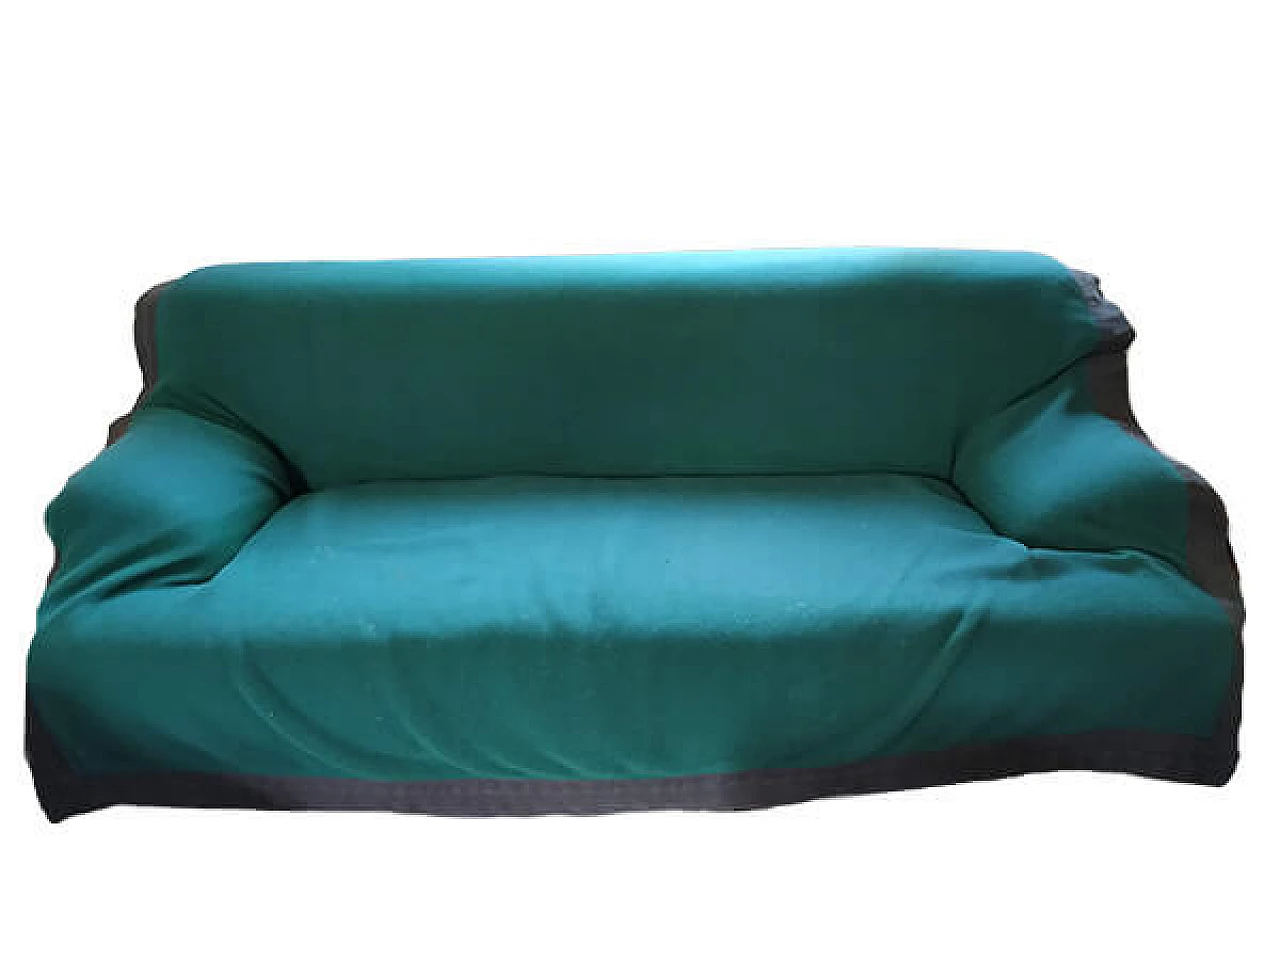 Sindbad green sofa by Vico Magistretti for Cassina, 1970s 1307630